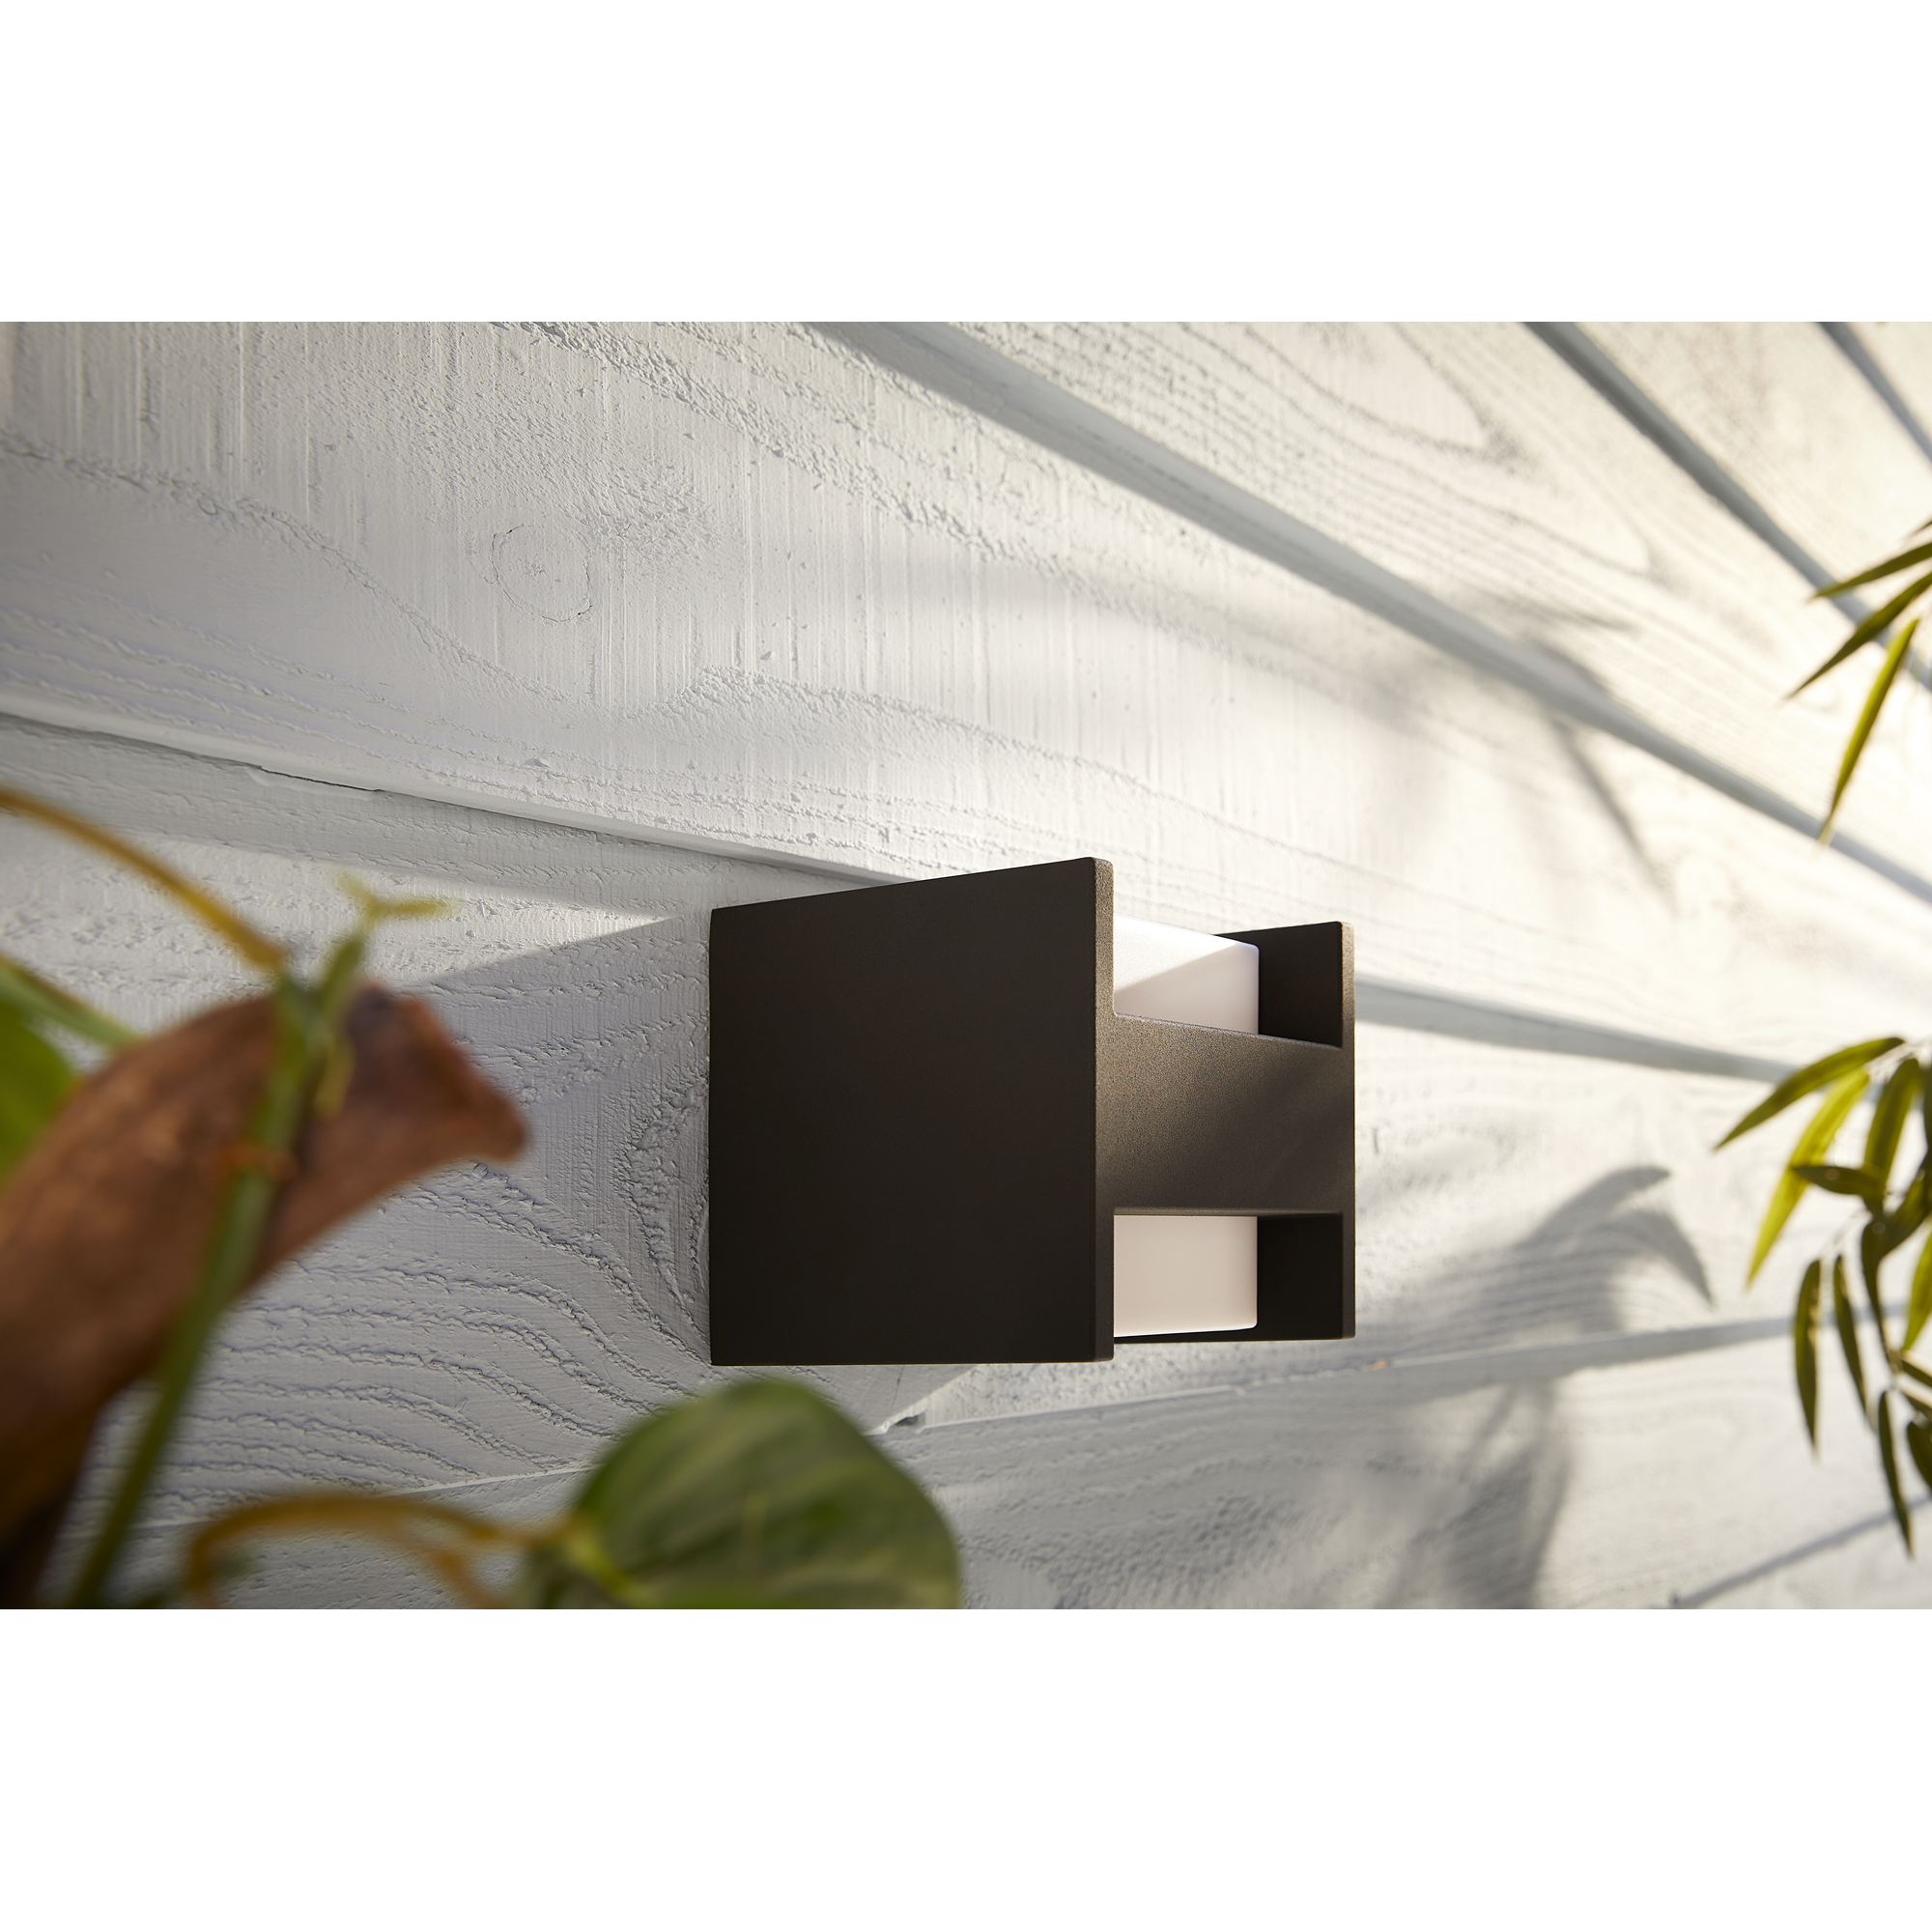 Wandleuchte 'Hue White' Fuzo quadratisch oben/unten schwarz 13 x 13 cm + product picture